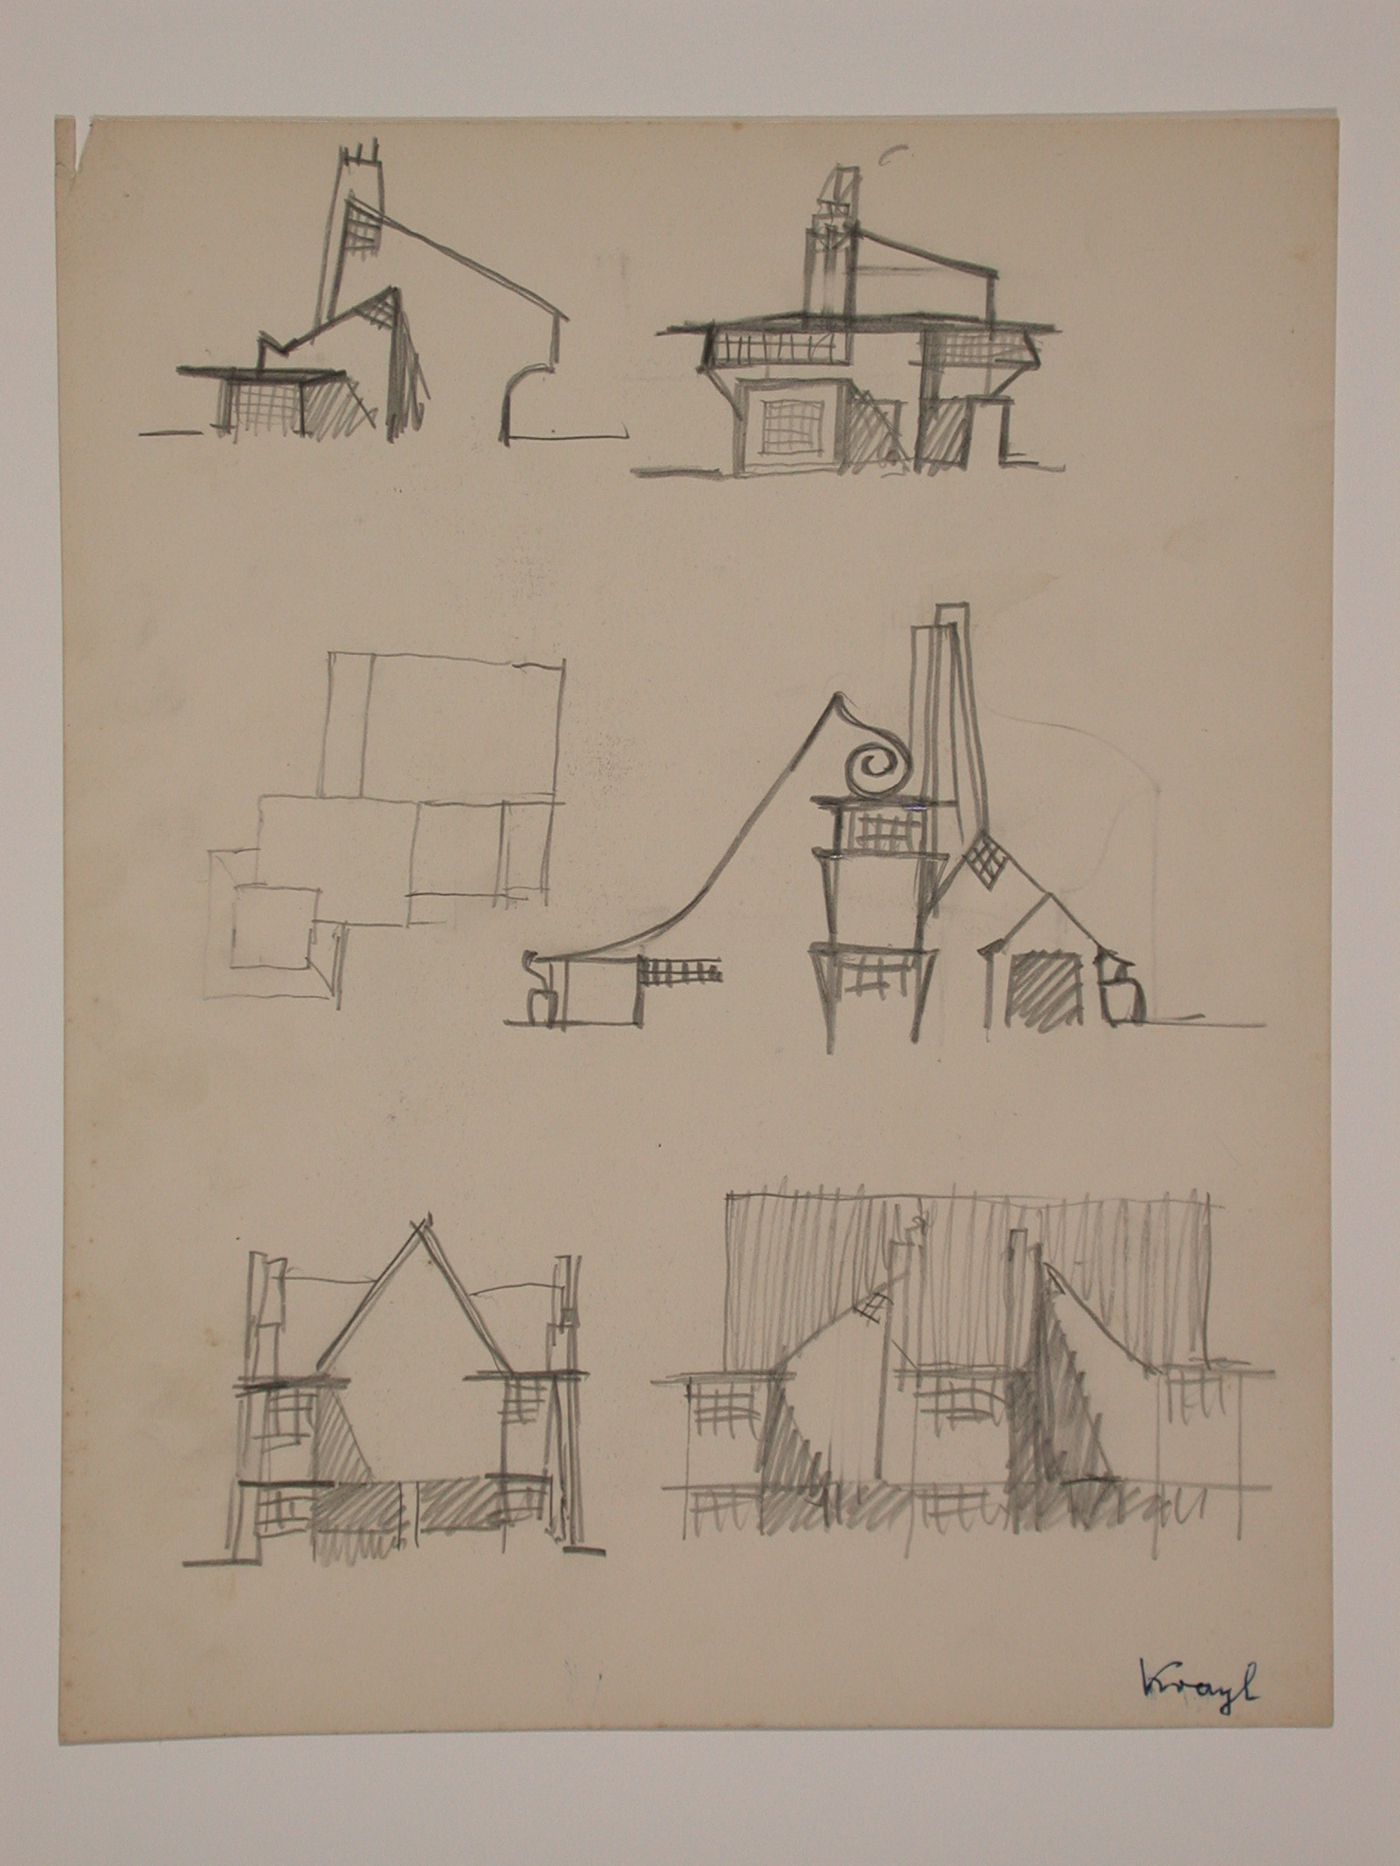 Sketches of buildings by Carl Krayl